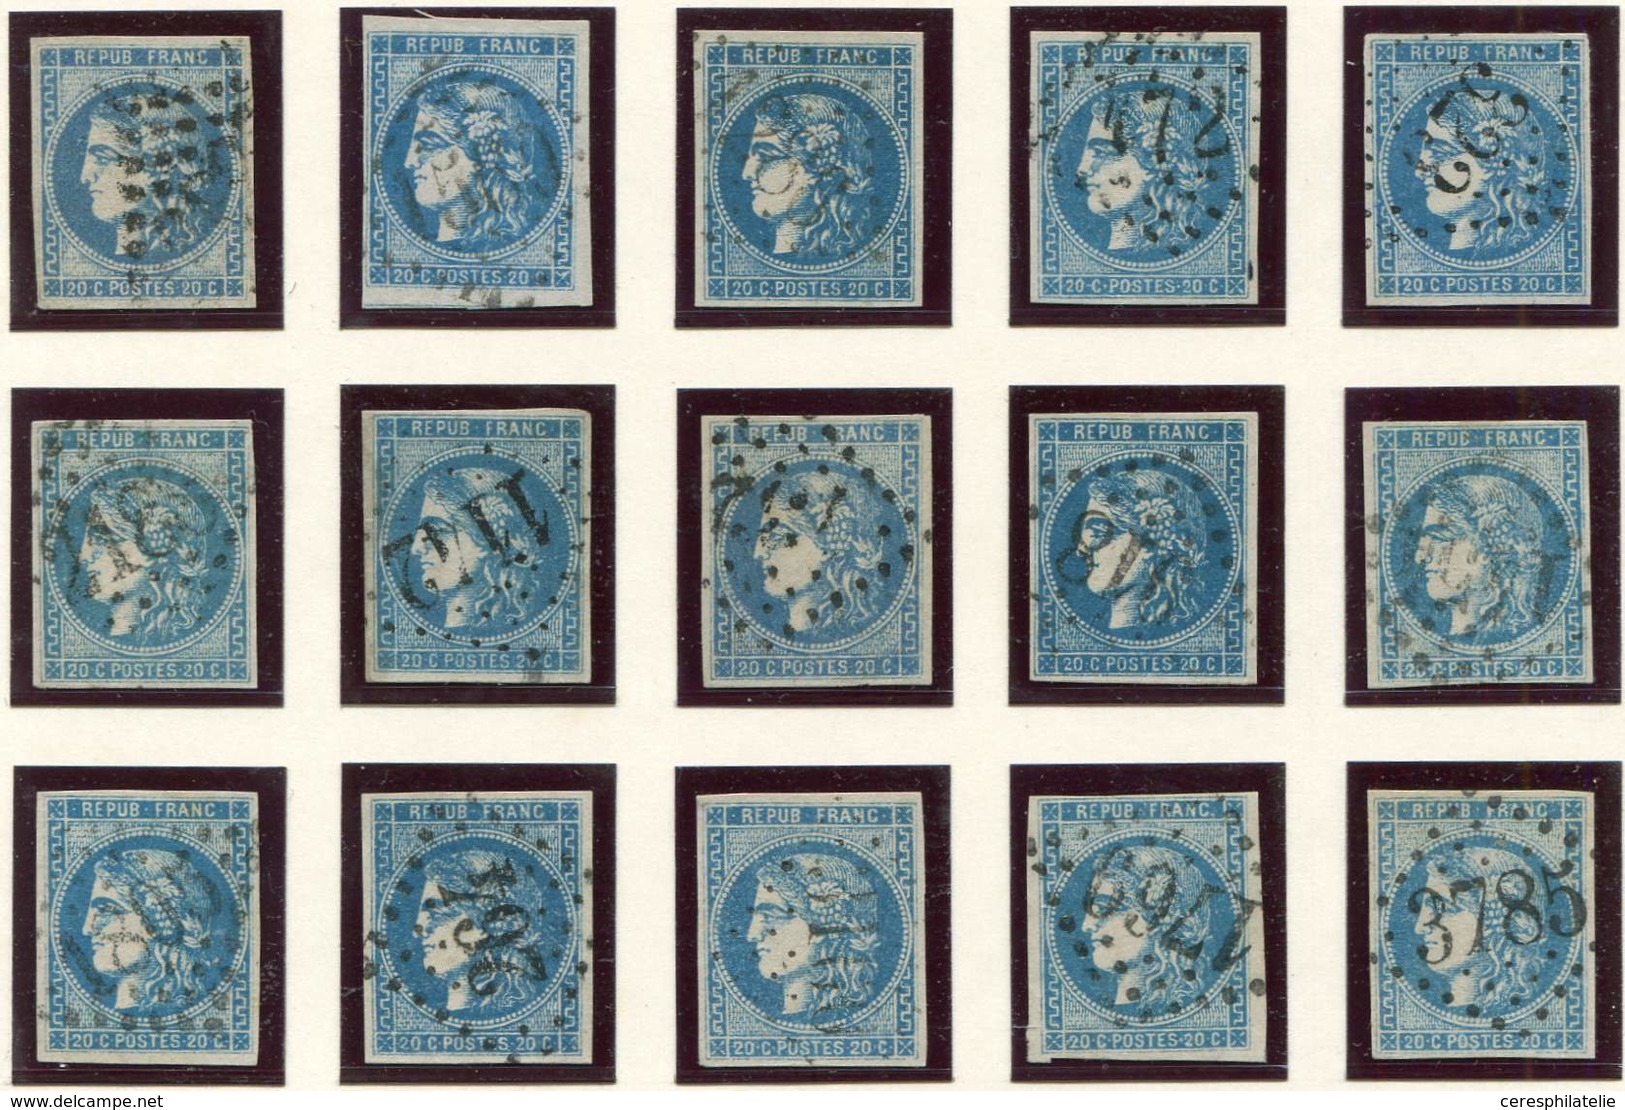 EMISSION DE BORDEAUX 46A  20c. Bleu, T III, R I, BLOC REPORT Reconstitué, Obl., TB - 1870 Emission De Bordeaux